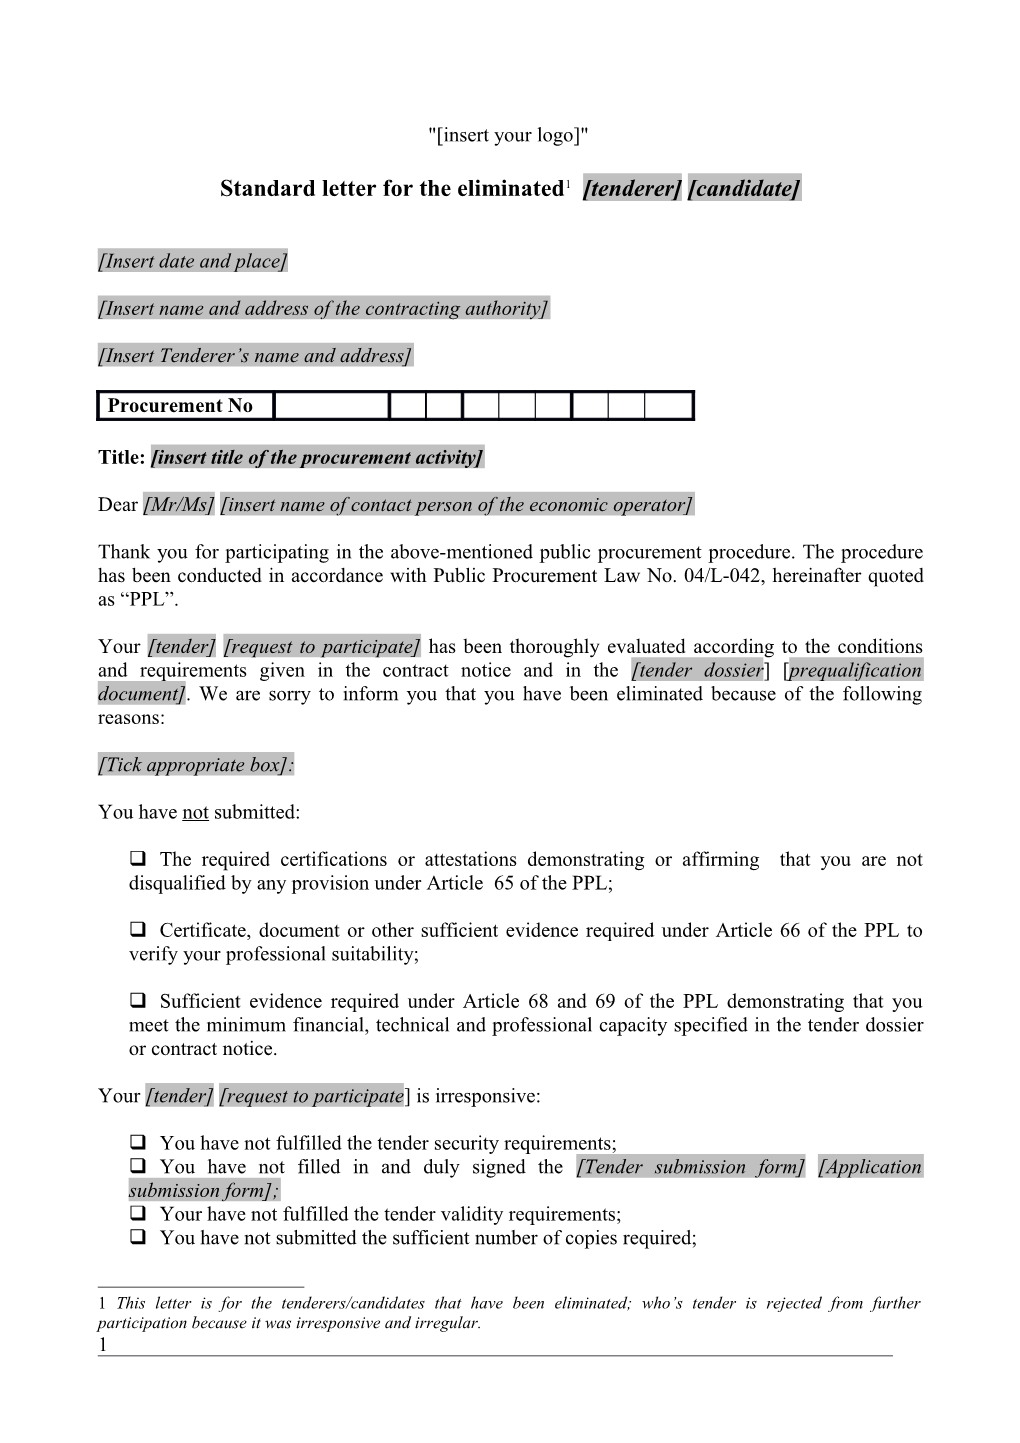 Standard Letter Information About Rejection of Tender